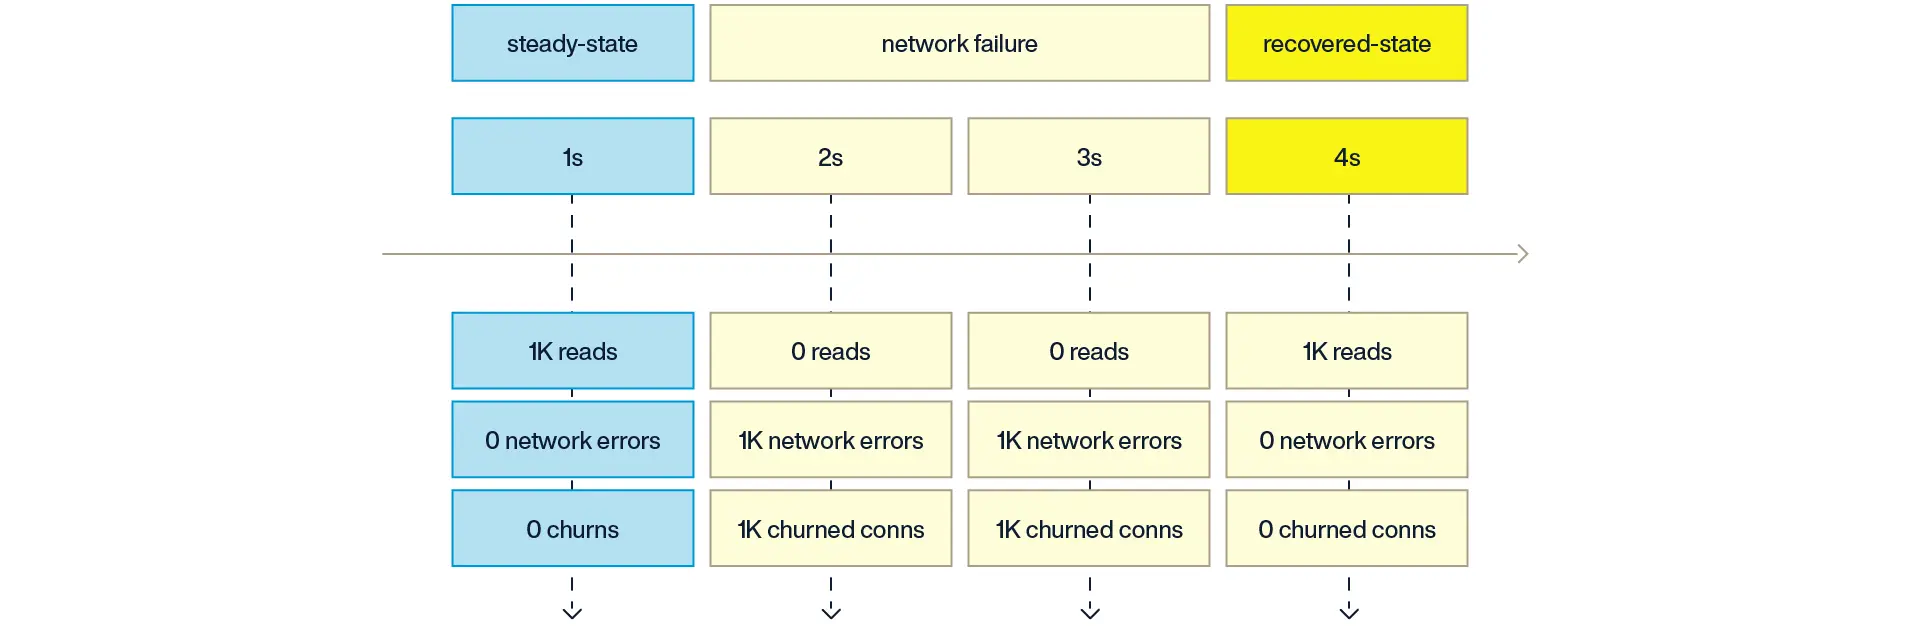 circuit-breaker-pattern-network-failure